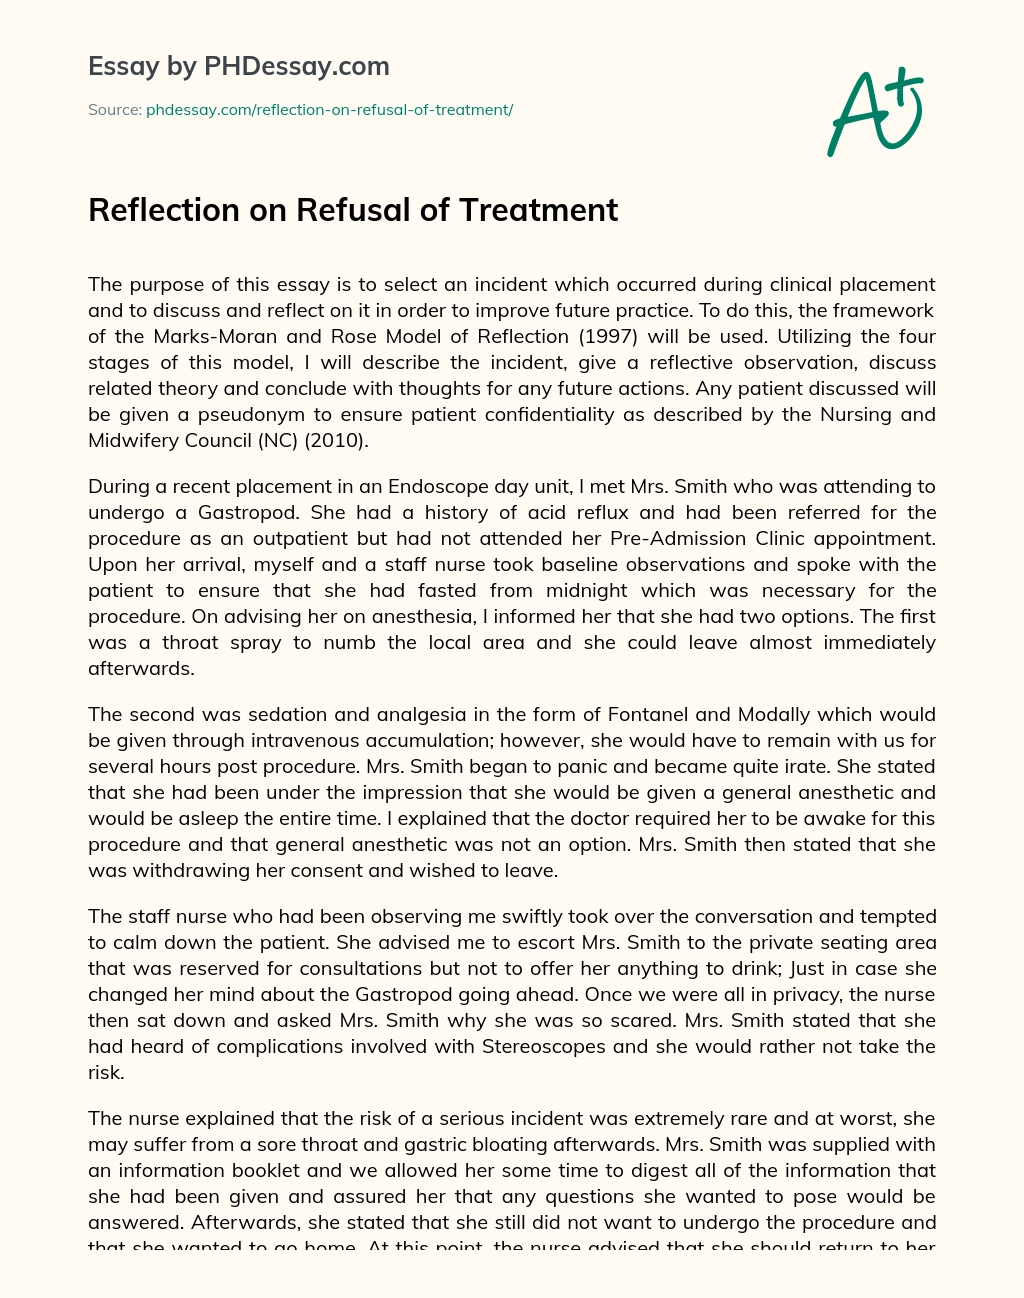 Reflection on Refusal of Treatment essay